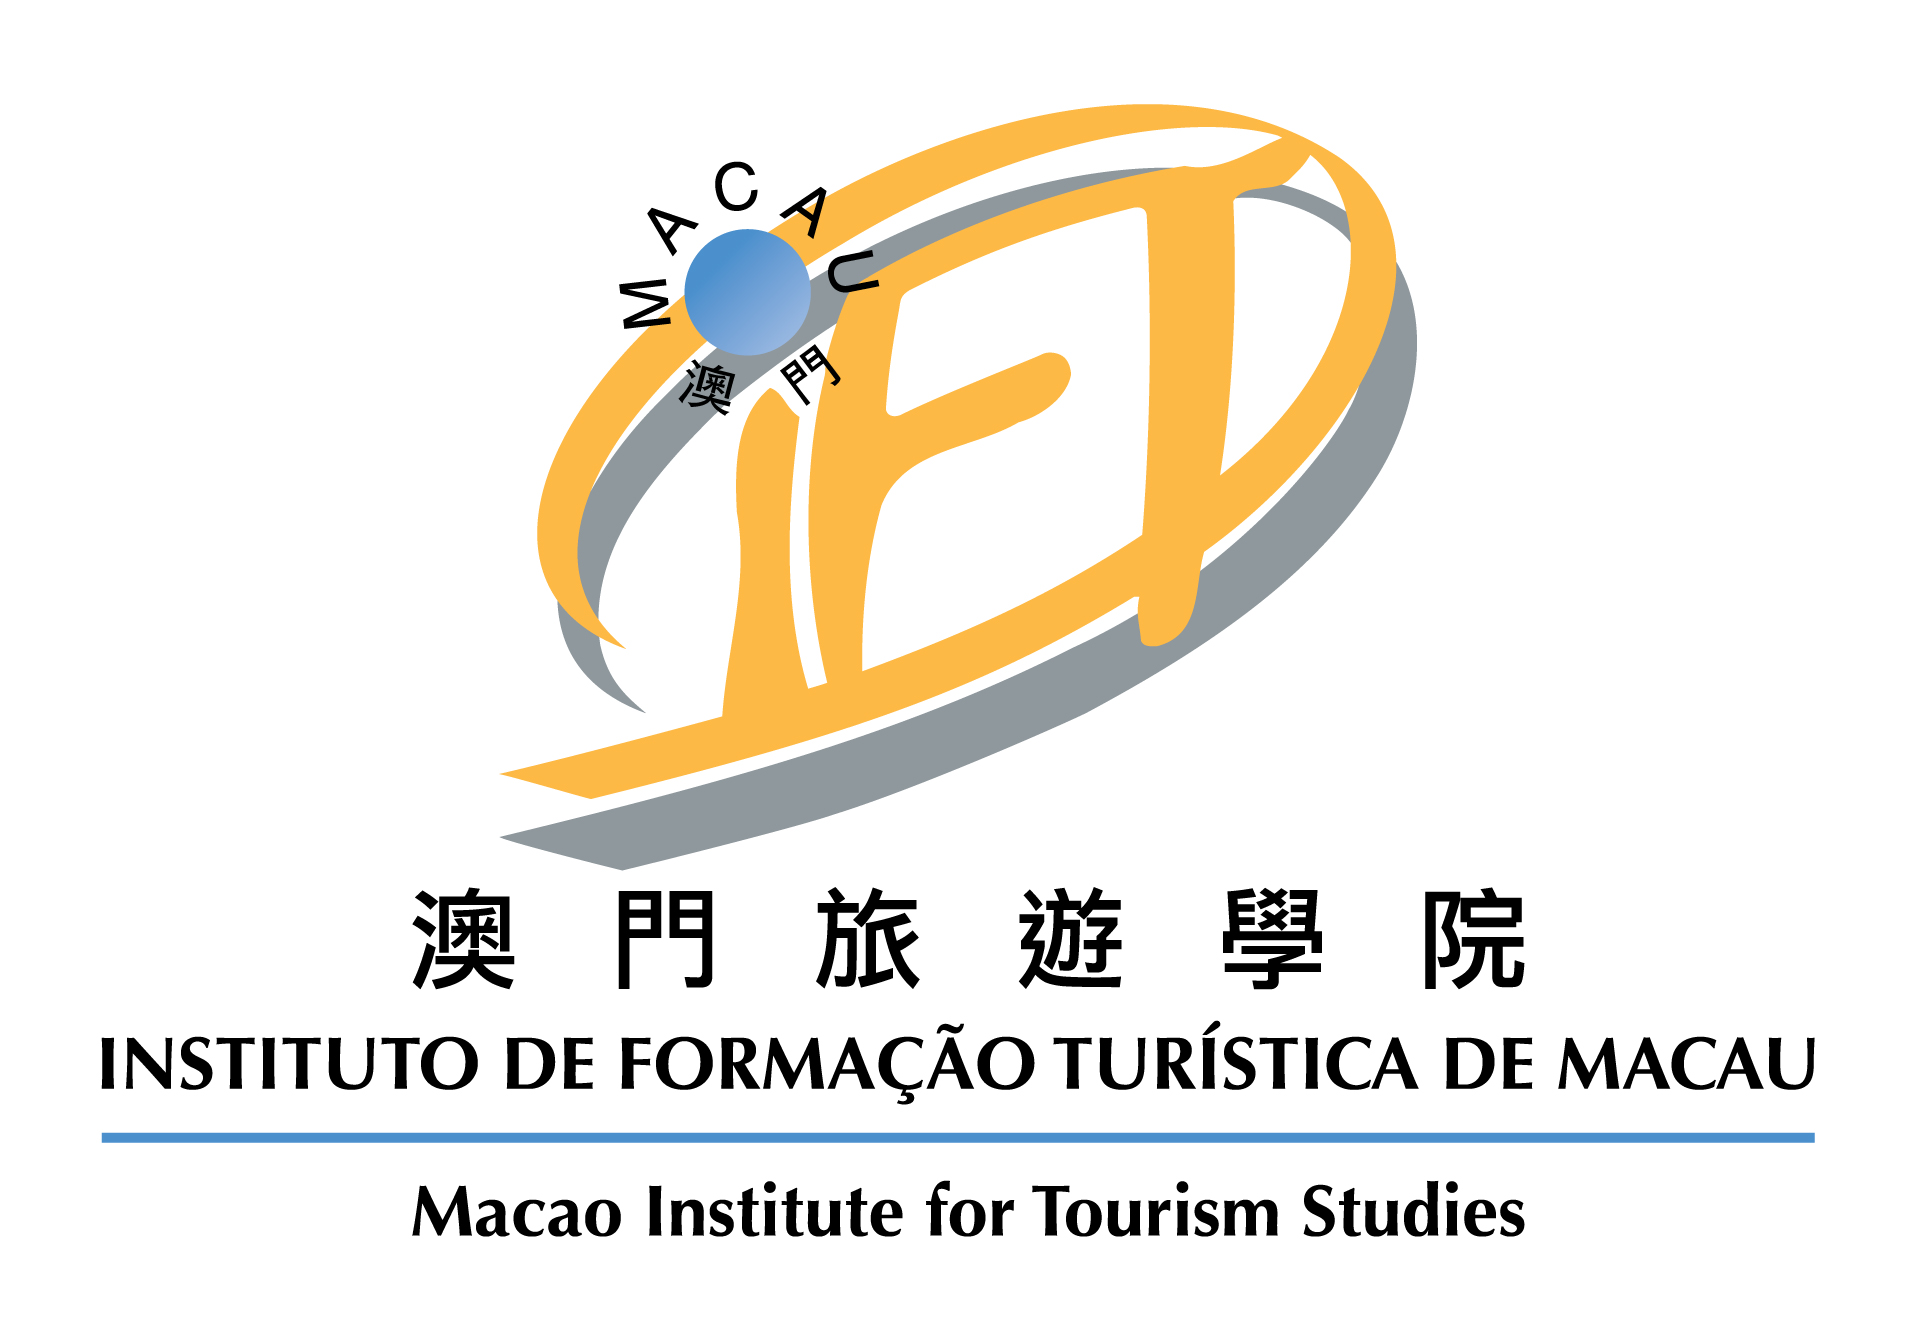 Macao Institute for Tourism Studies